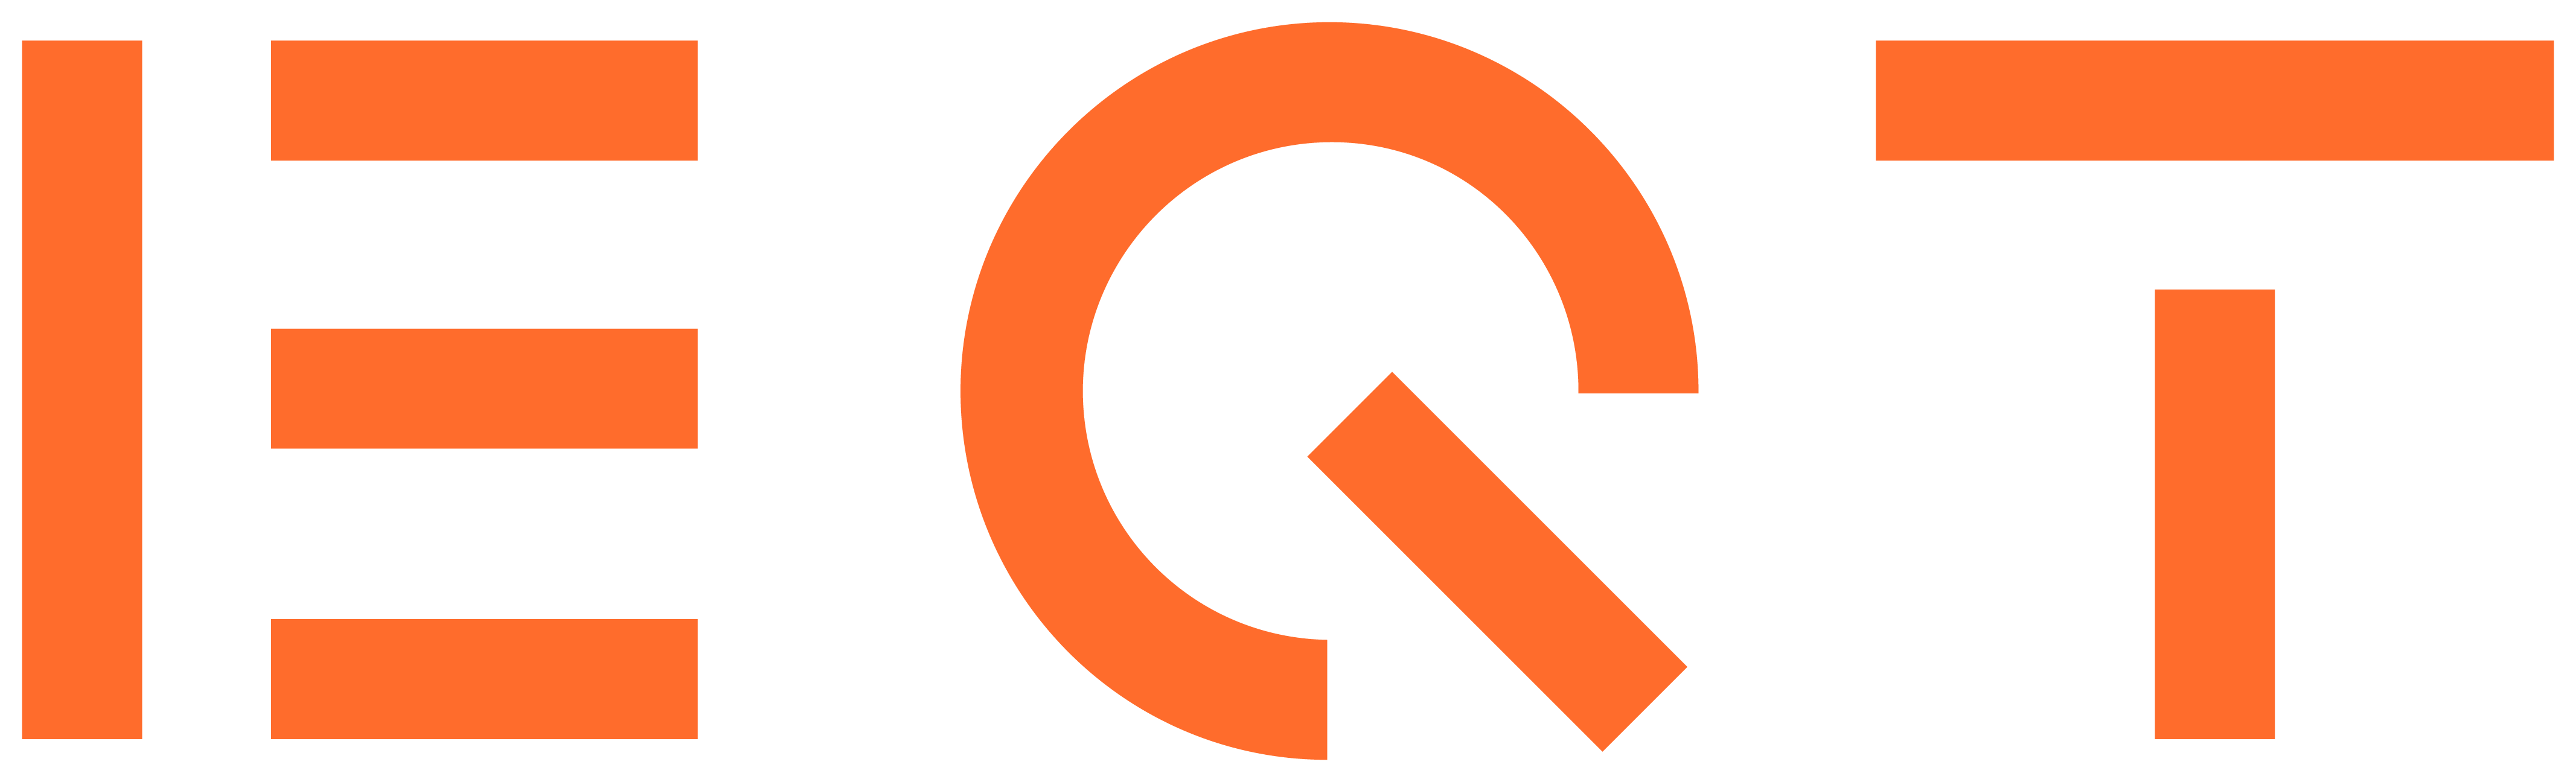 EQT_(Unternehmen)_logo